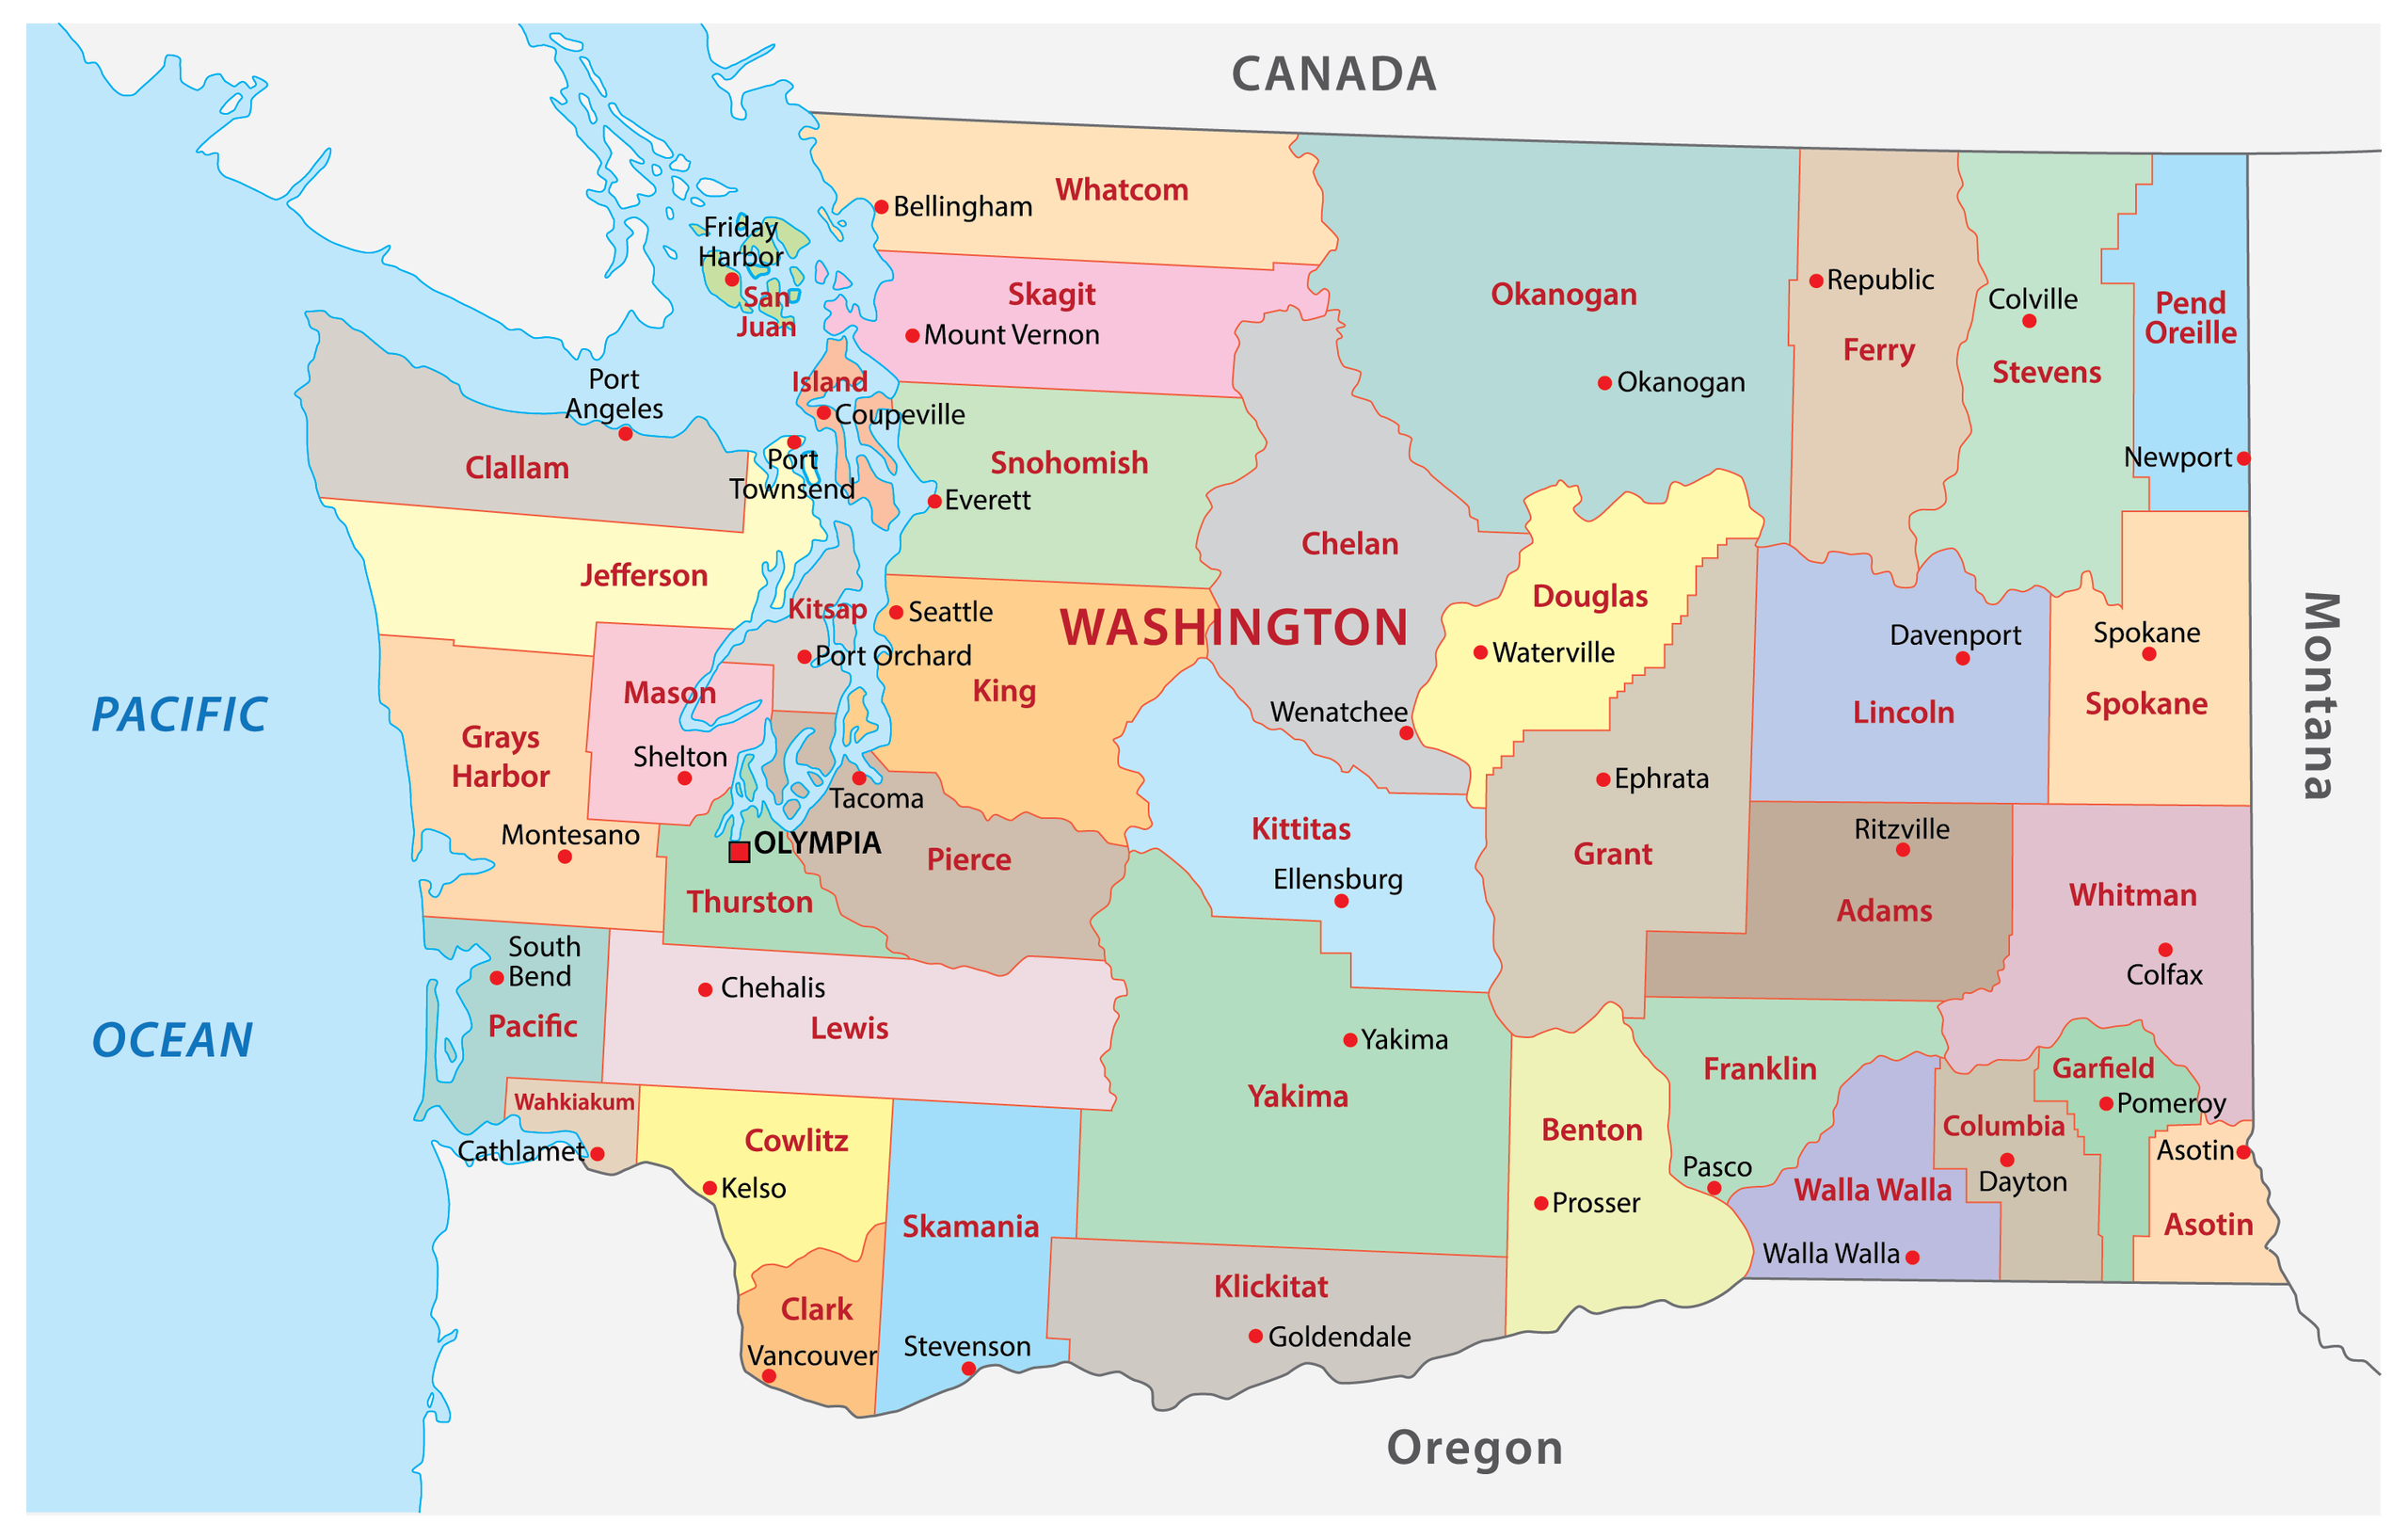 Alphabetical list of Washington Counties